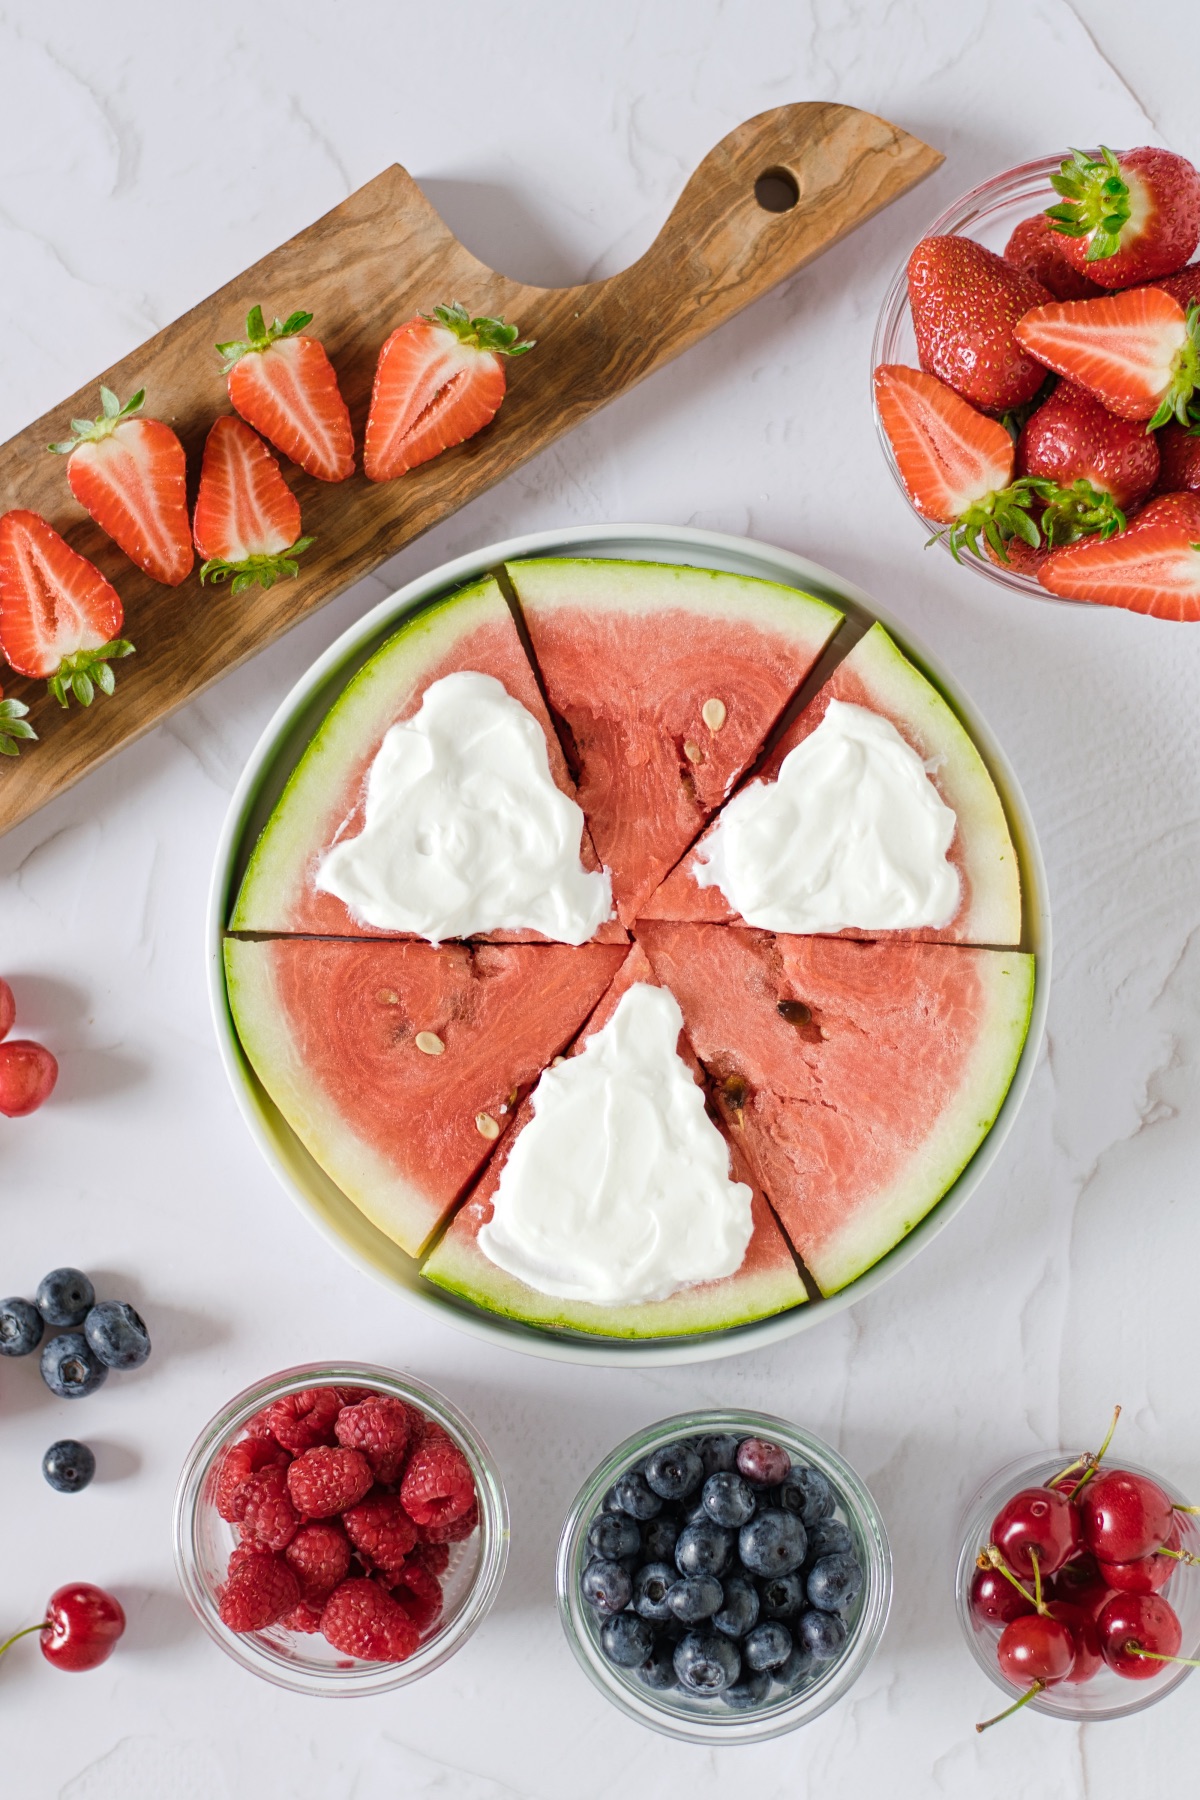 add yogurt to the watermelon slices